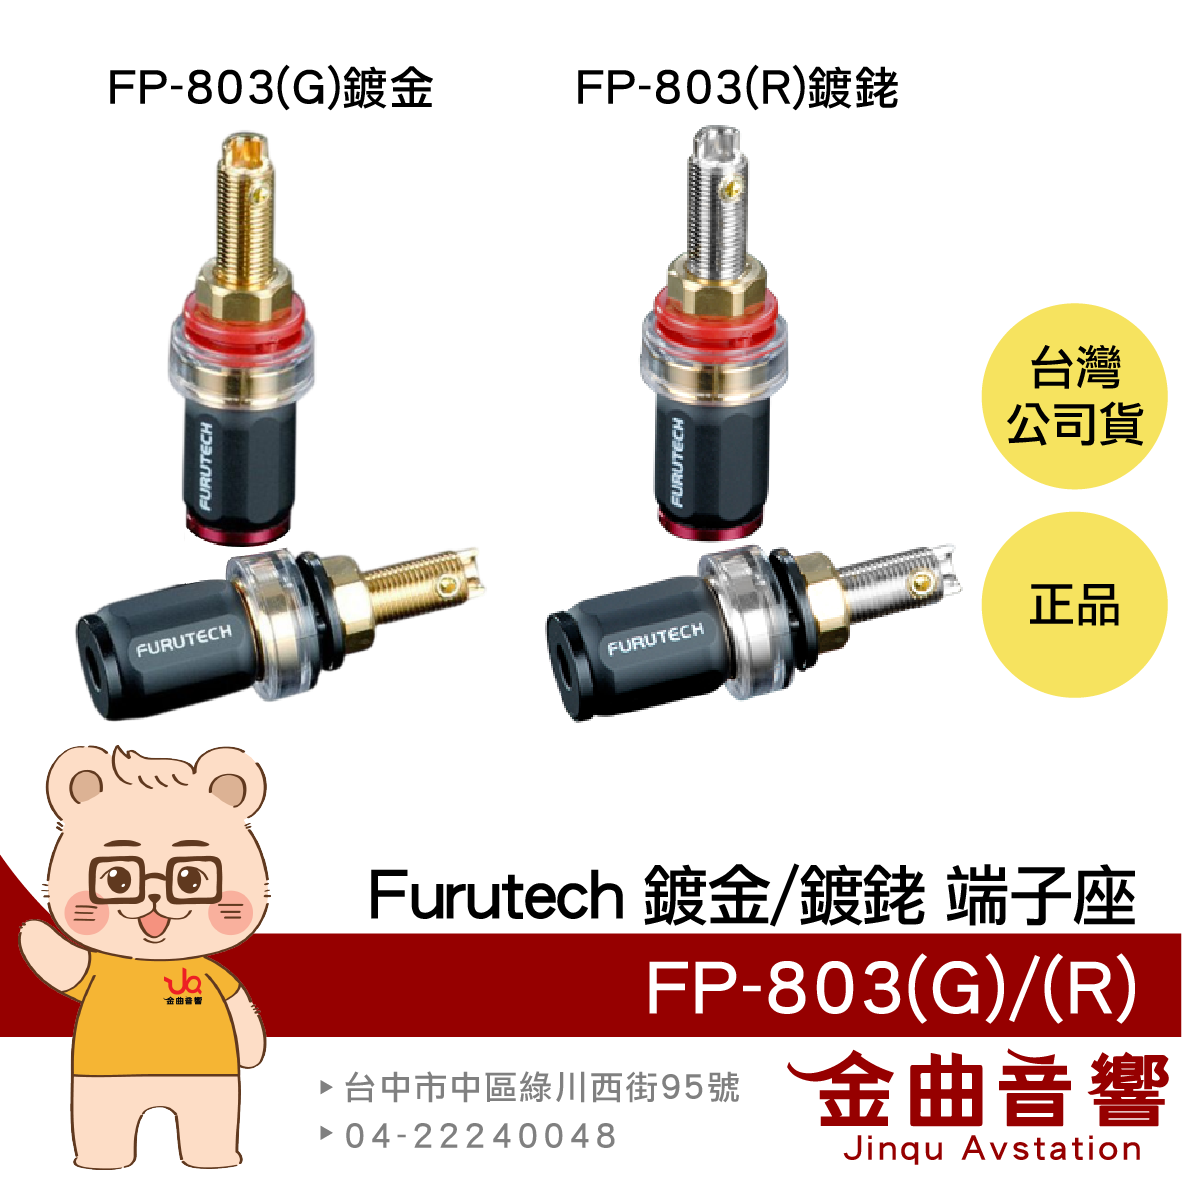 FURUTECH 古河 FP-803(G) FP-803(R) 鍍金 鍍銠 端子座 | 金曲音響